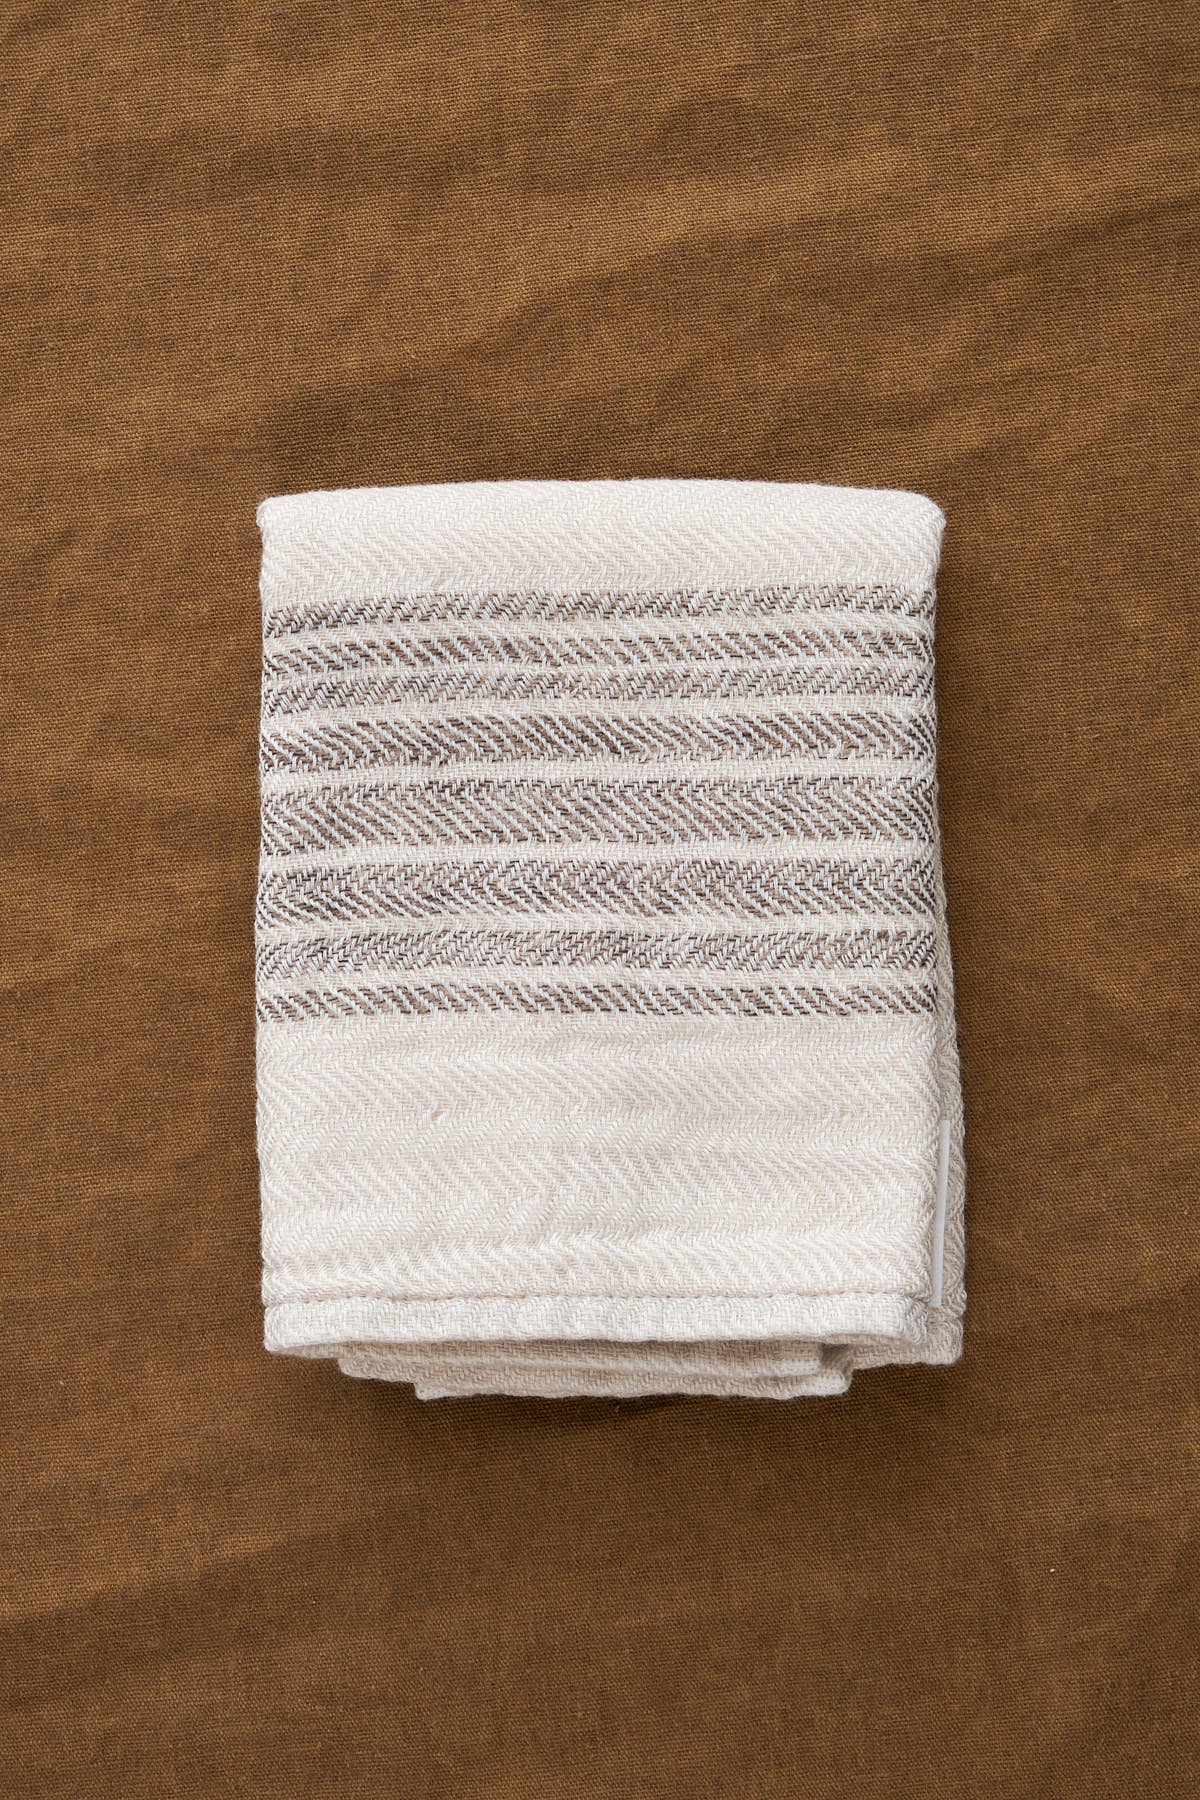 Flax Line Washcloth in Brown/Beige